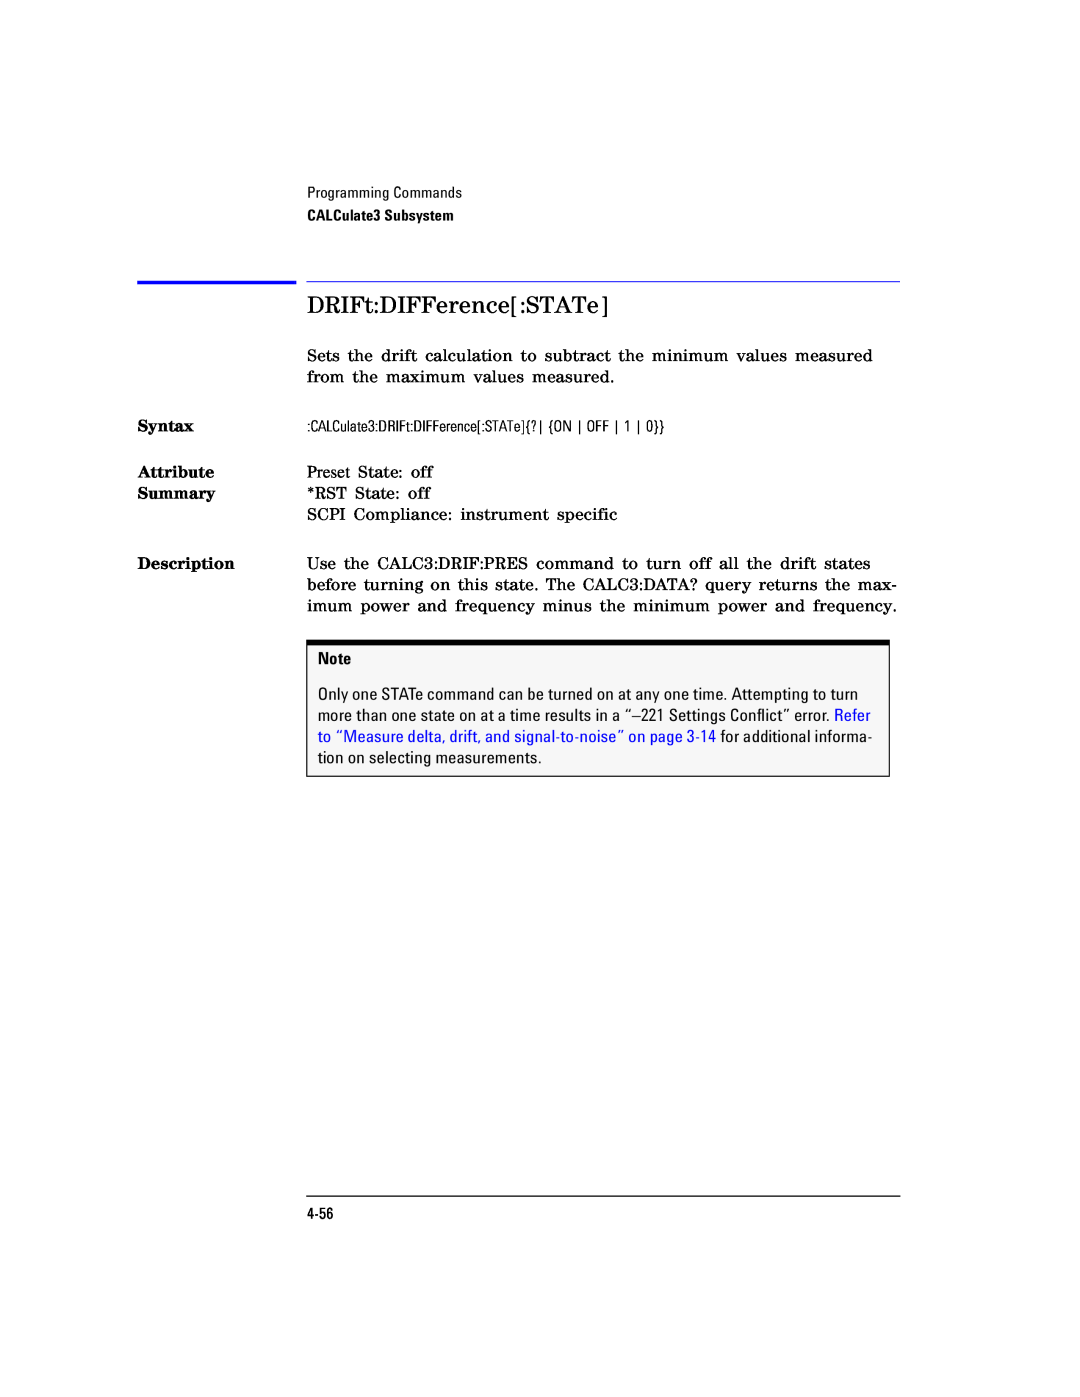 Agilent Technologies Agilent 86120C manual DRIFtDIFFerenceSTATe, Syntax, Attribute, Summary, Description 